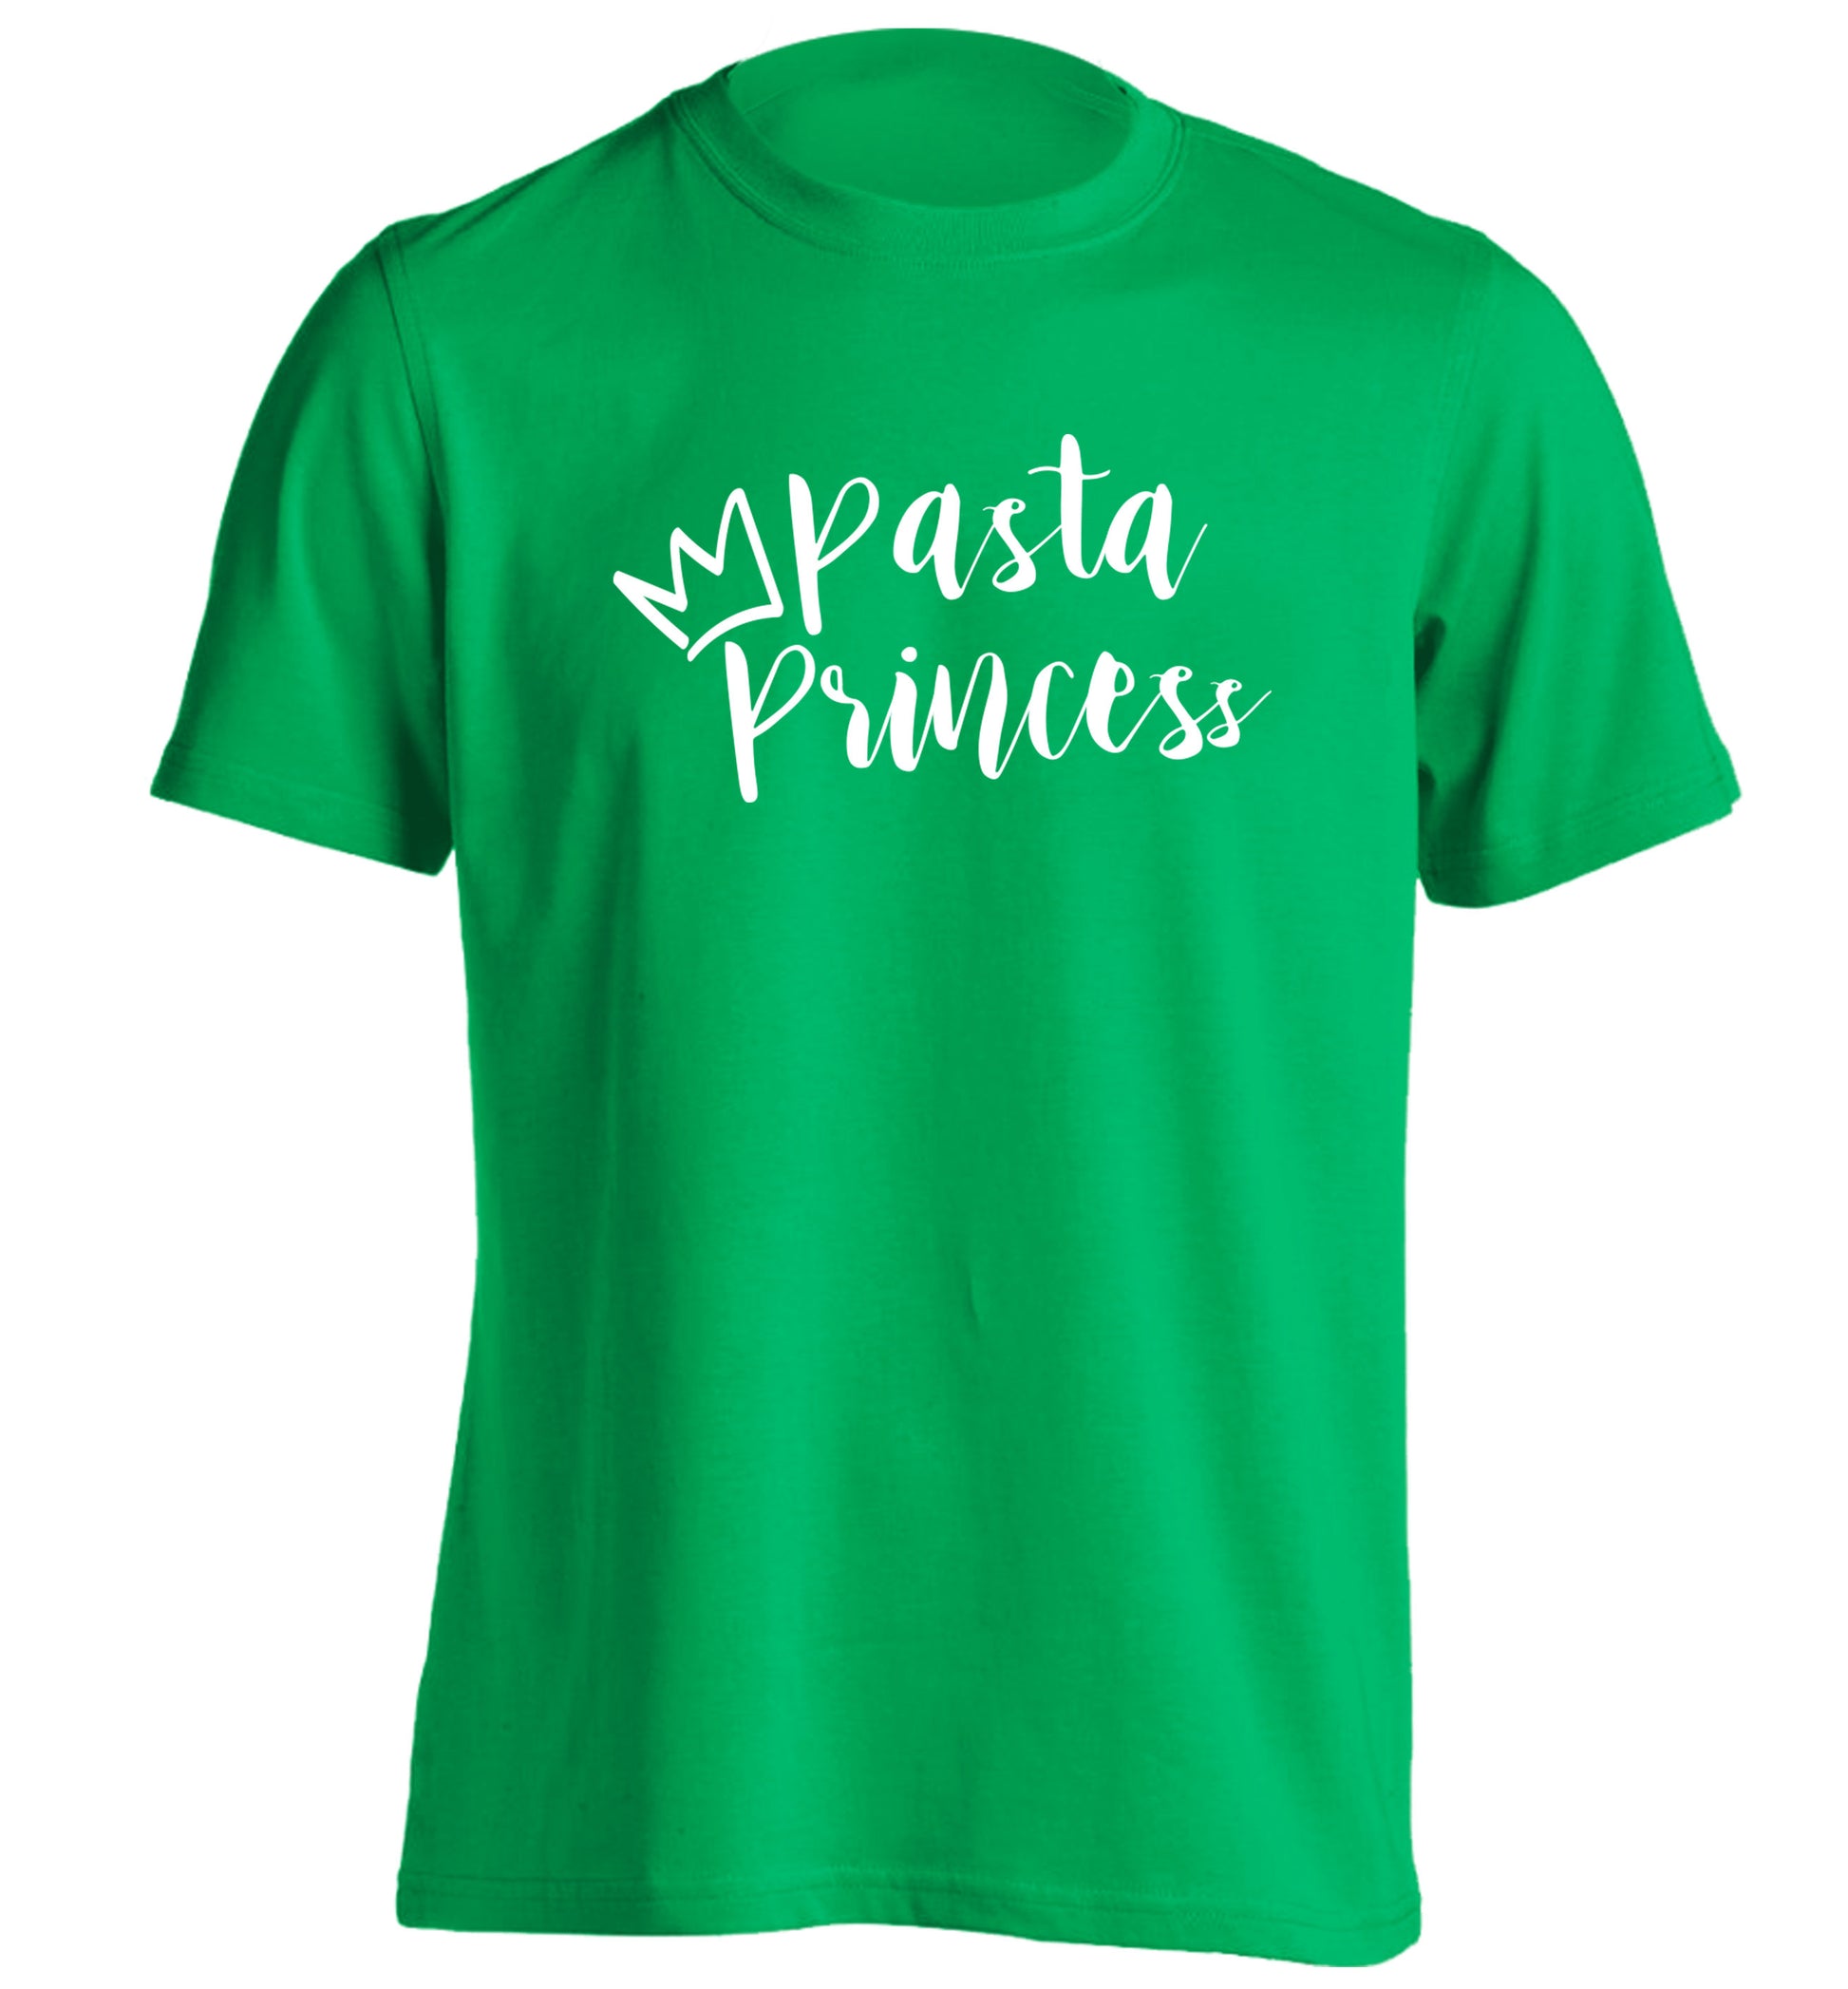 Pasta Princess adults unisex green Tshirt 2XL